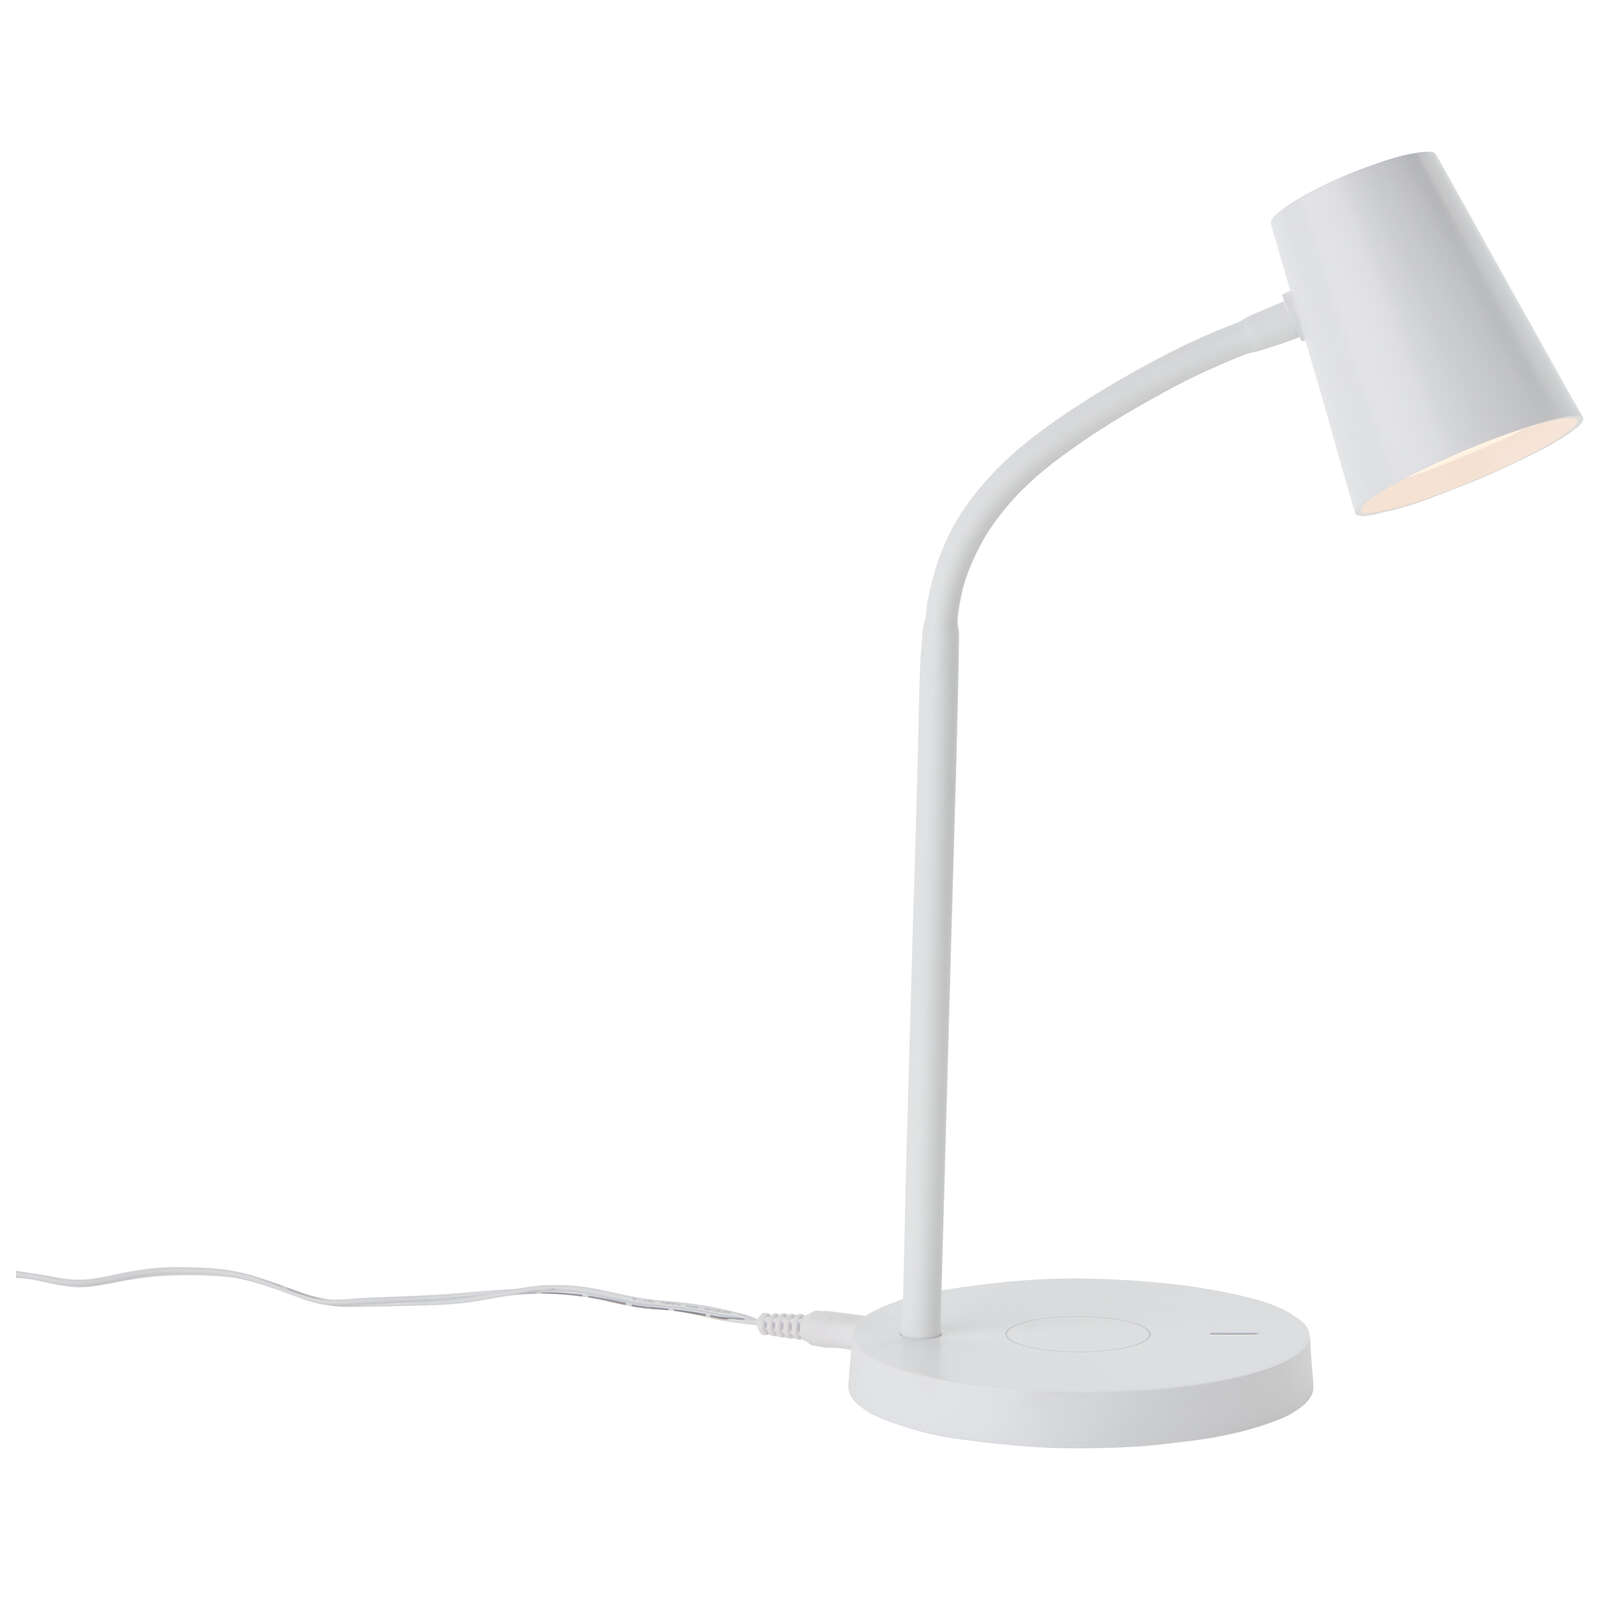             Plastic table lamp - Jannik - White
        